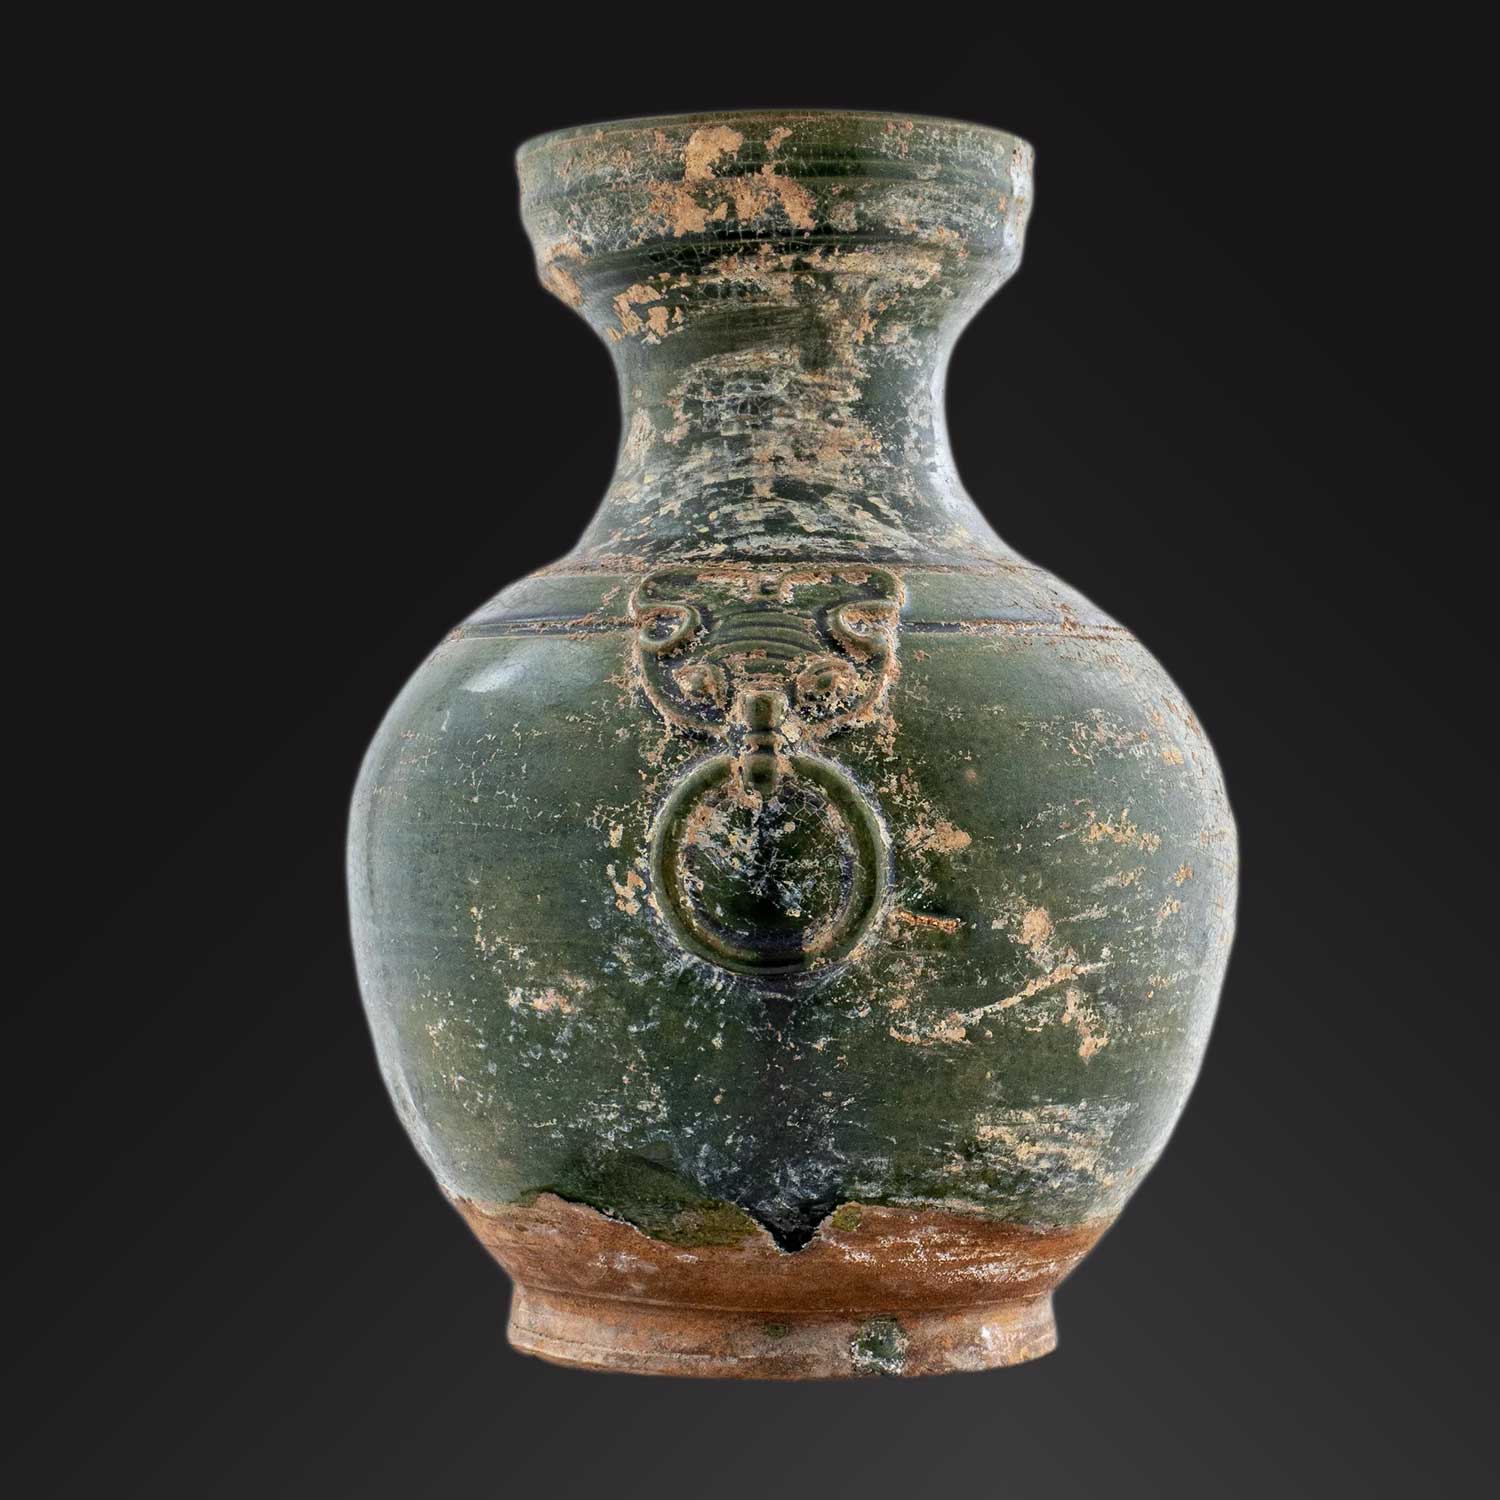 A Chinese Han Dynasty Mingqi Pottery Vase, Han Dynasty, ca. 200 BCE - 200 CE